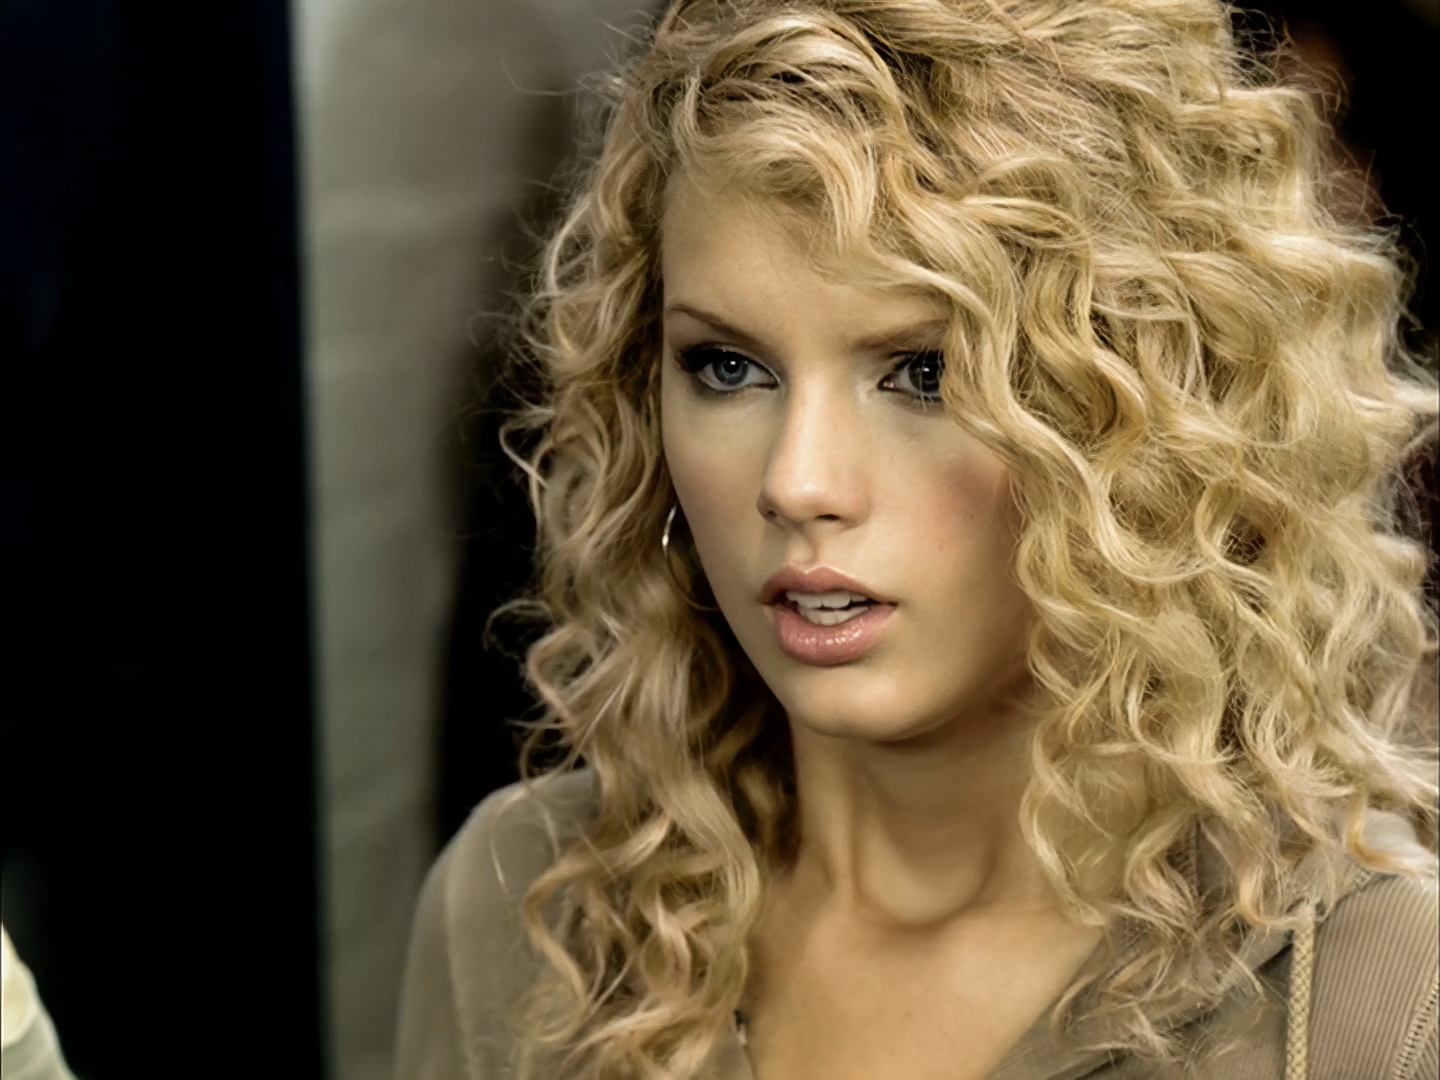 Taylor Swift Teardrops On My Guitar Upscale 1080p Sharemaniaus 